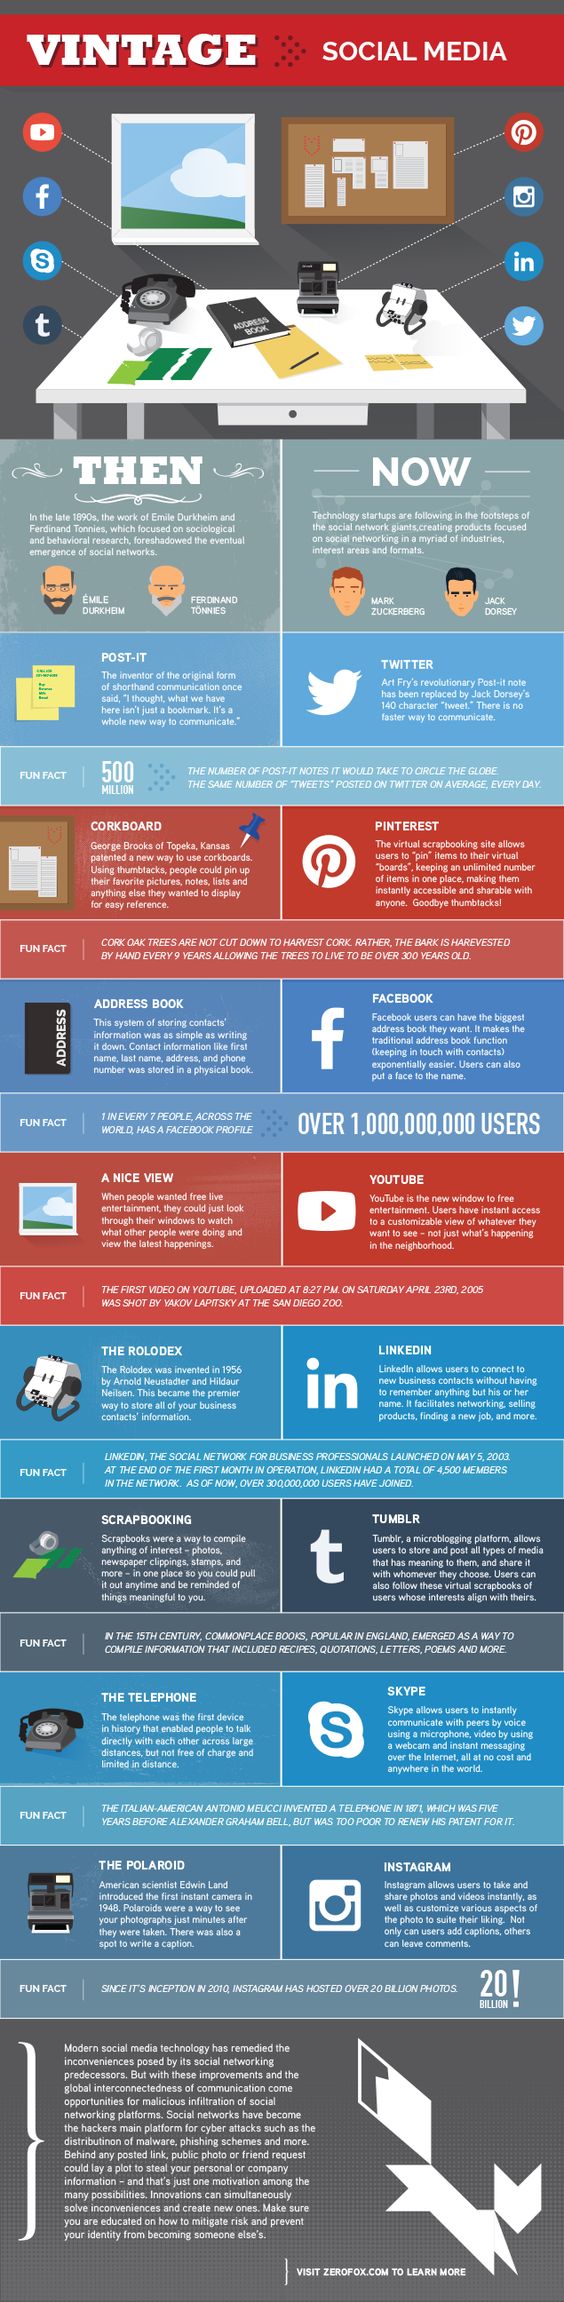 Vintage Social Media - Twitter, Pinterest, Facebook, YouTube, LinkedIn Instagram Then And Now #infographic